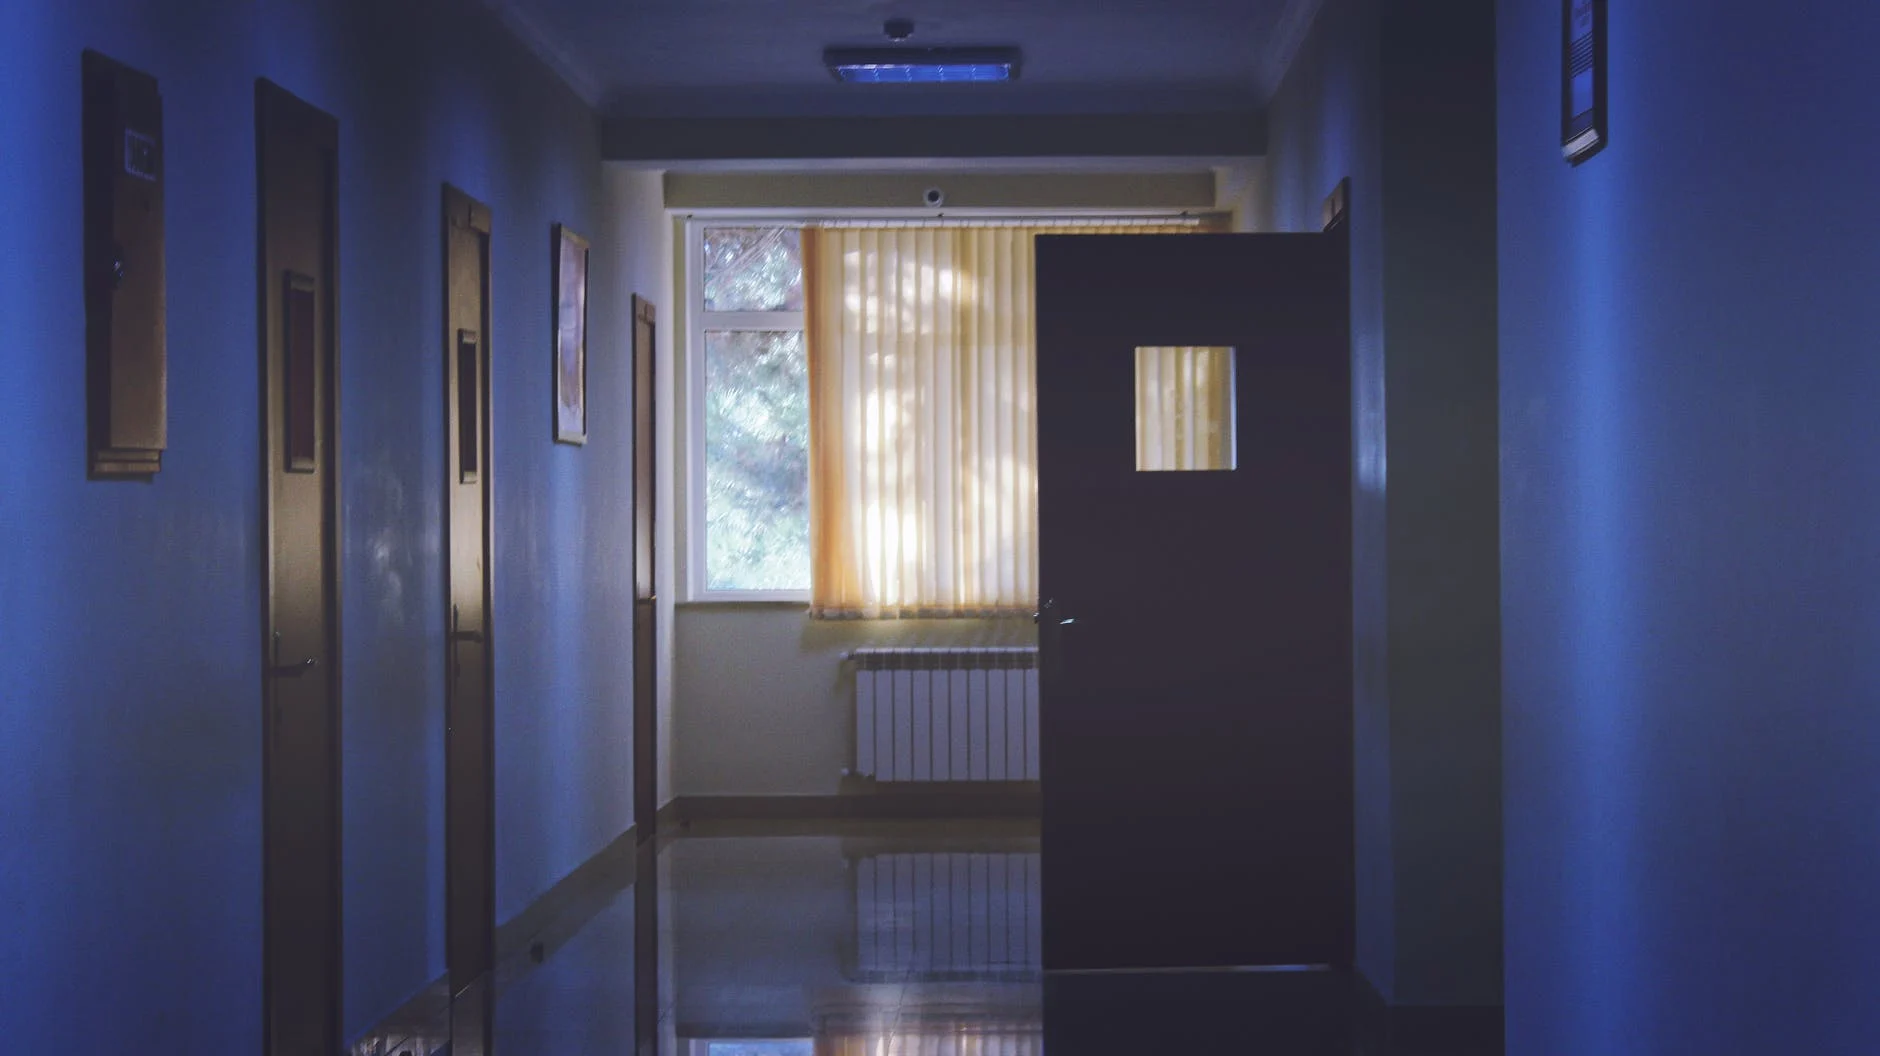 hospital-hallway-at-night